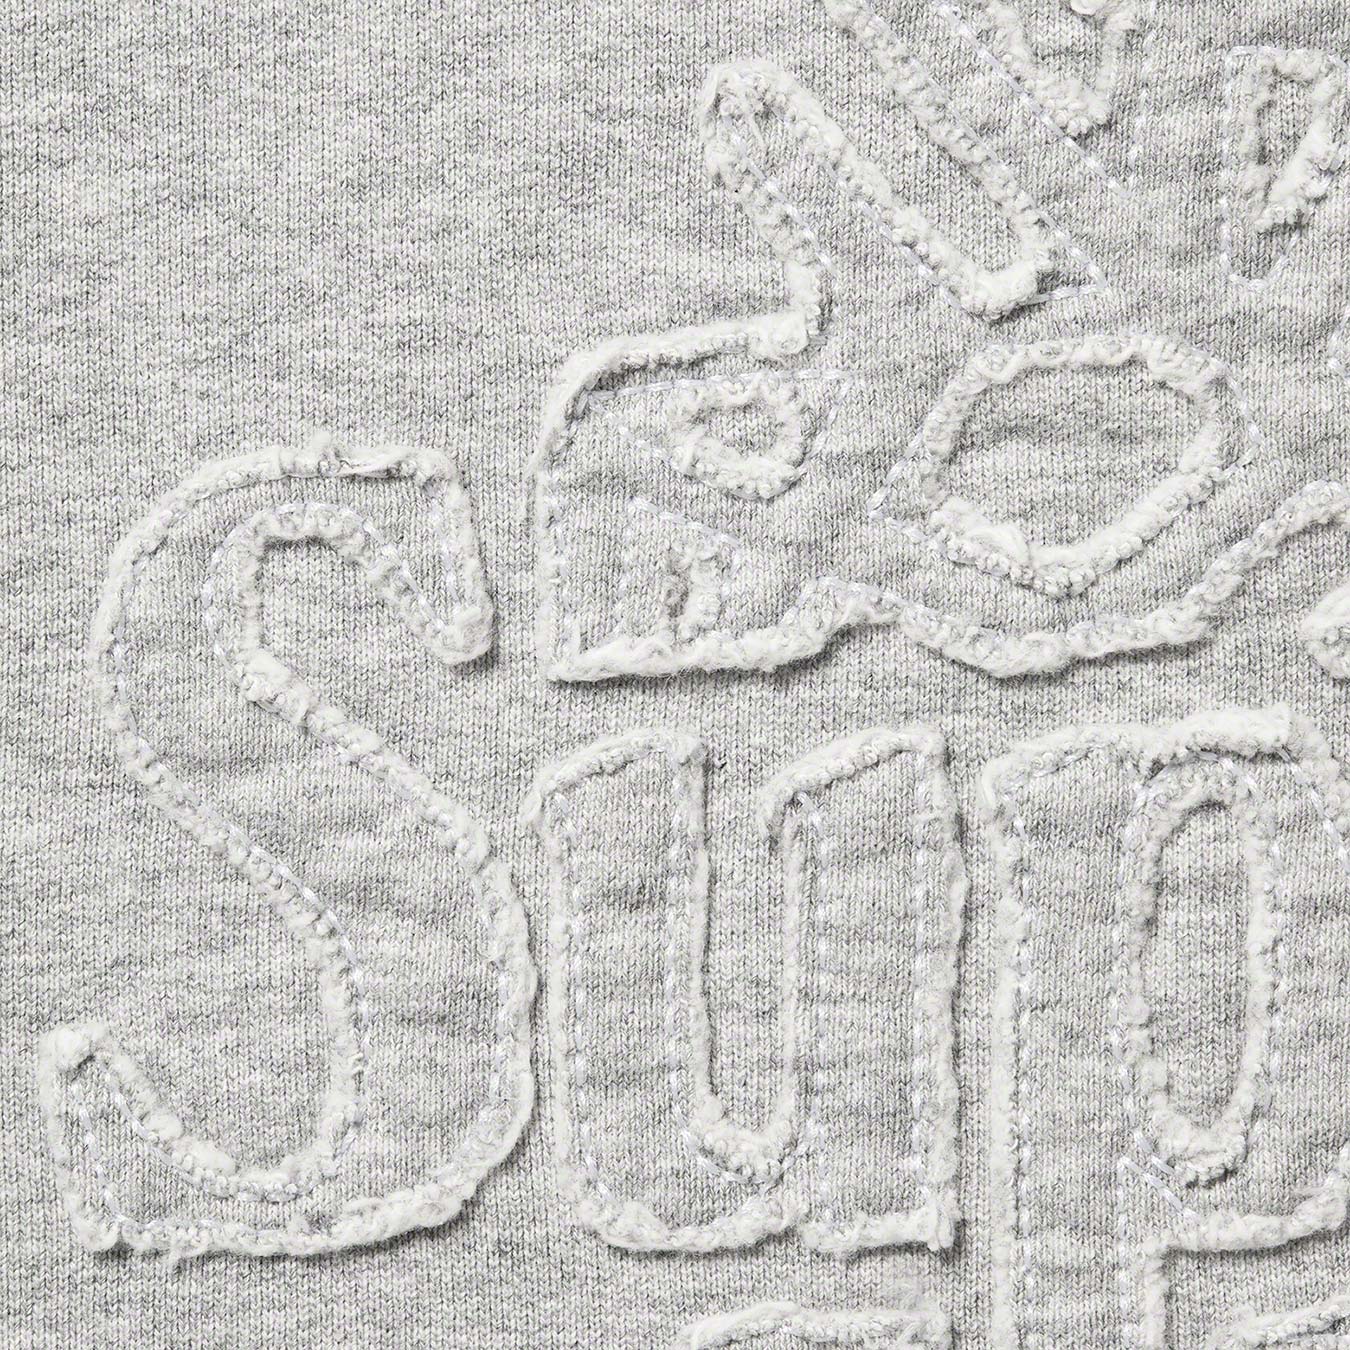 Timberland Hooded Sweatshirt - spring summer 2023 - Supreme